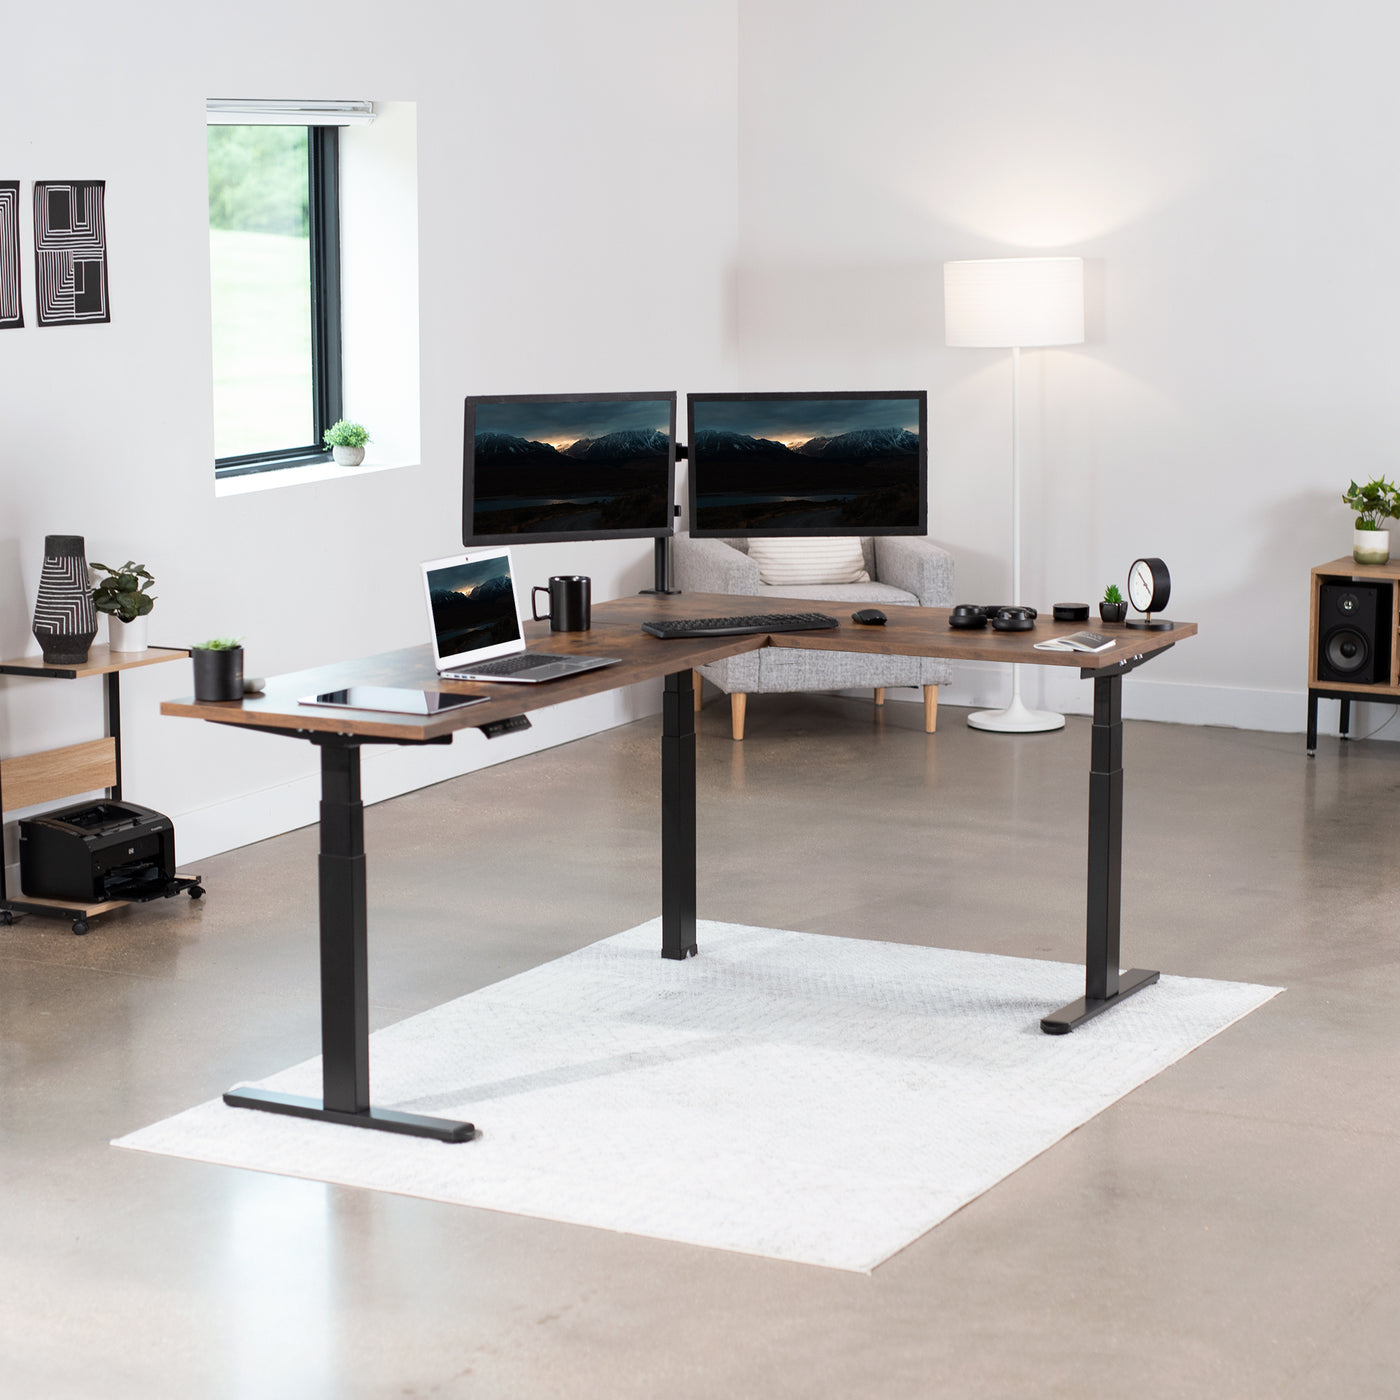 Large L-shaped desk in a modern minimalist room.